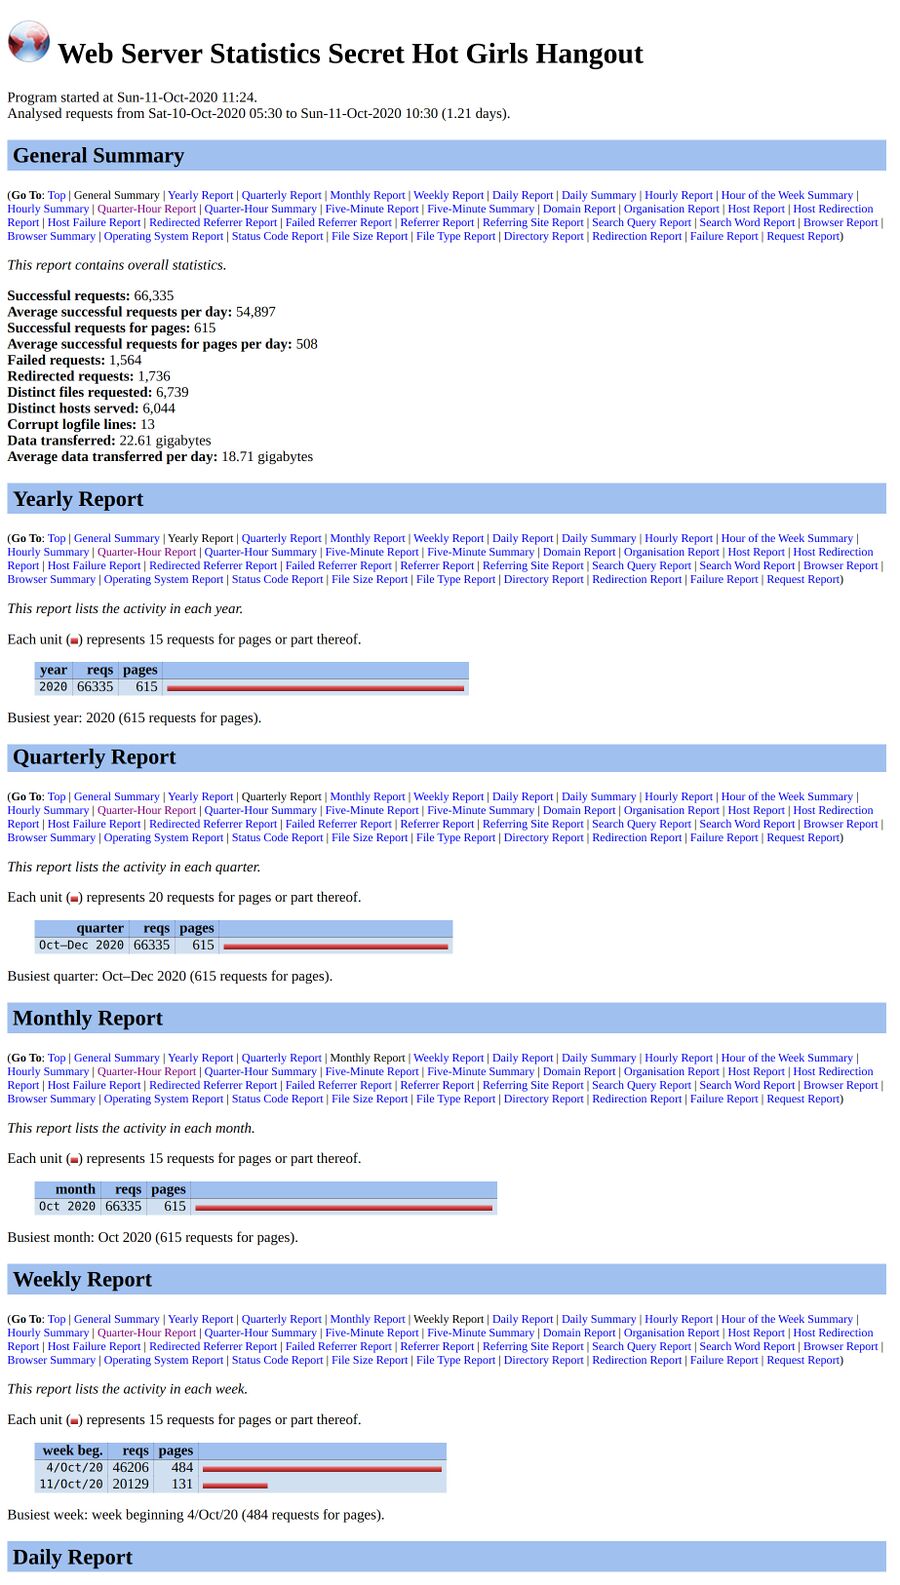 Analog web server statistics - general summary.jpg